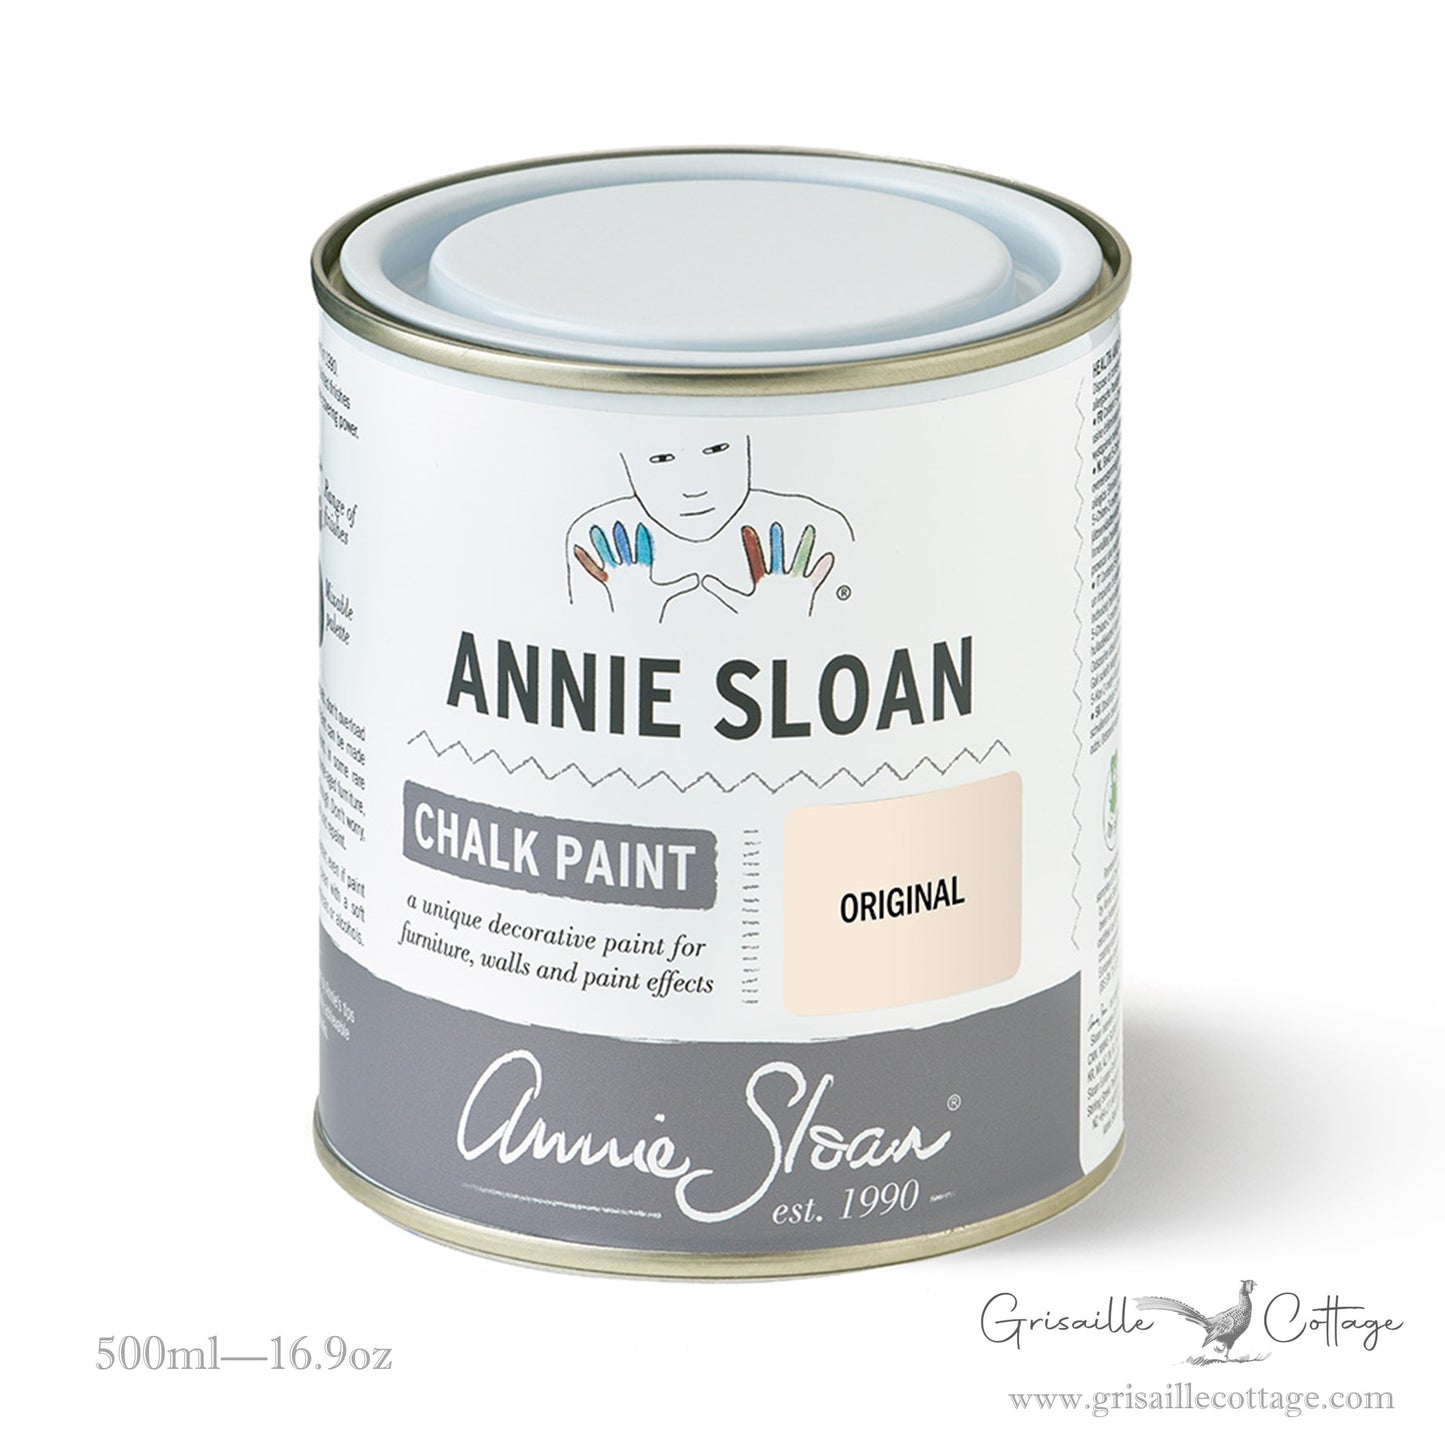 Original - Annie Sloan Chalk Paint